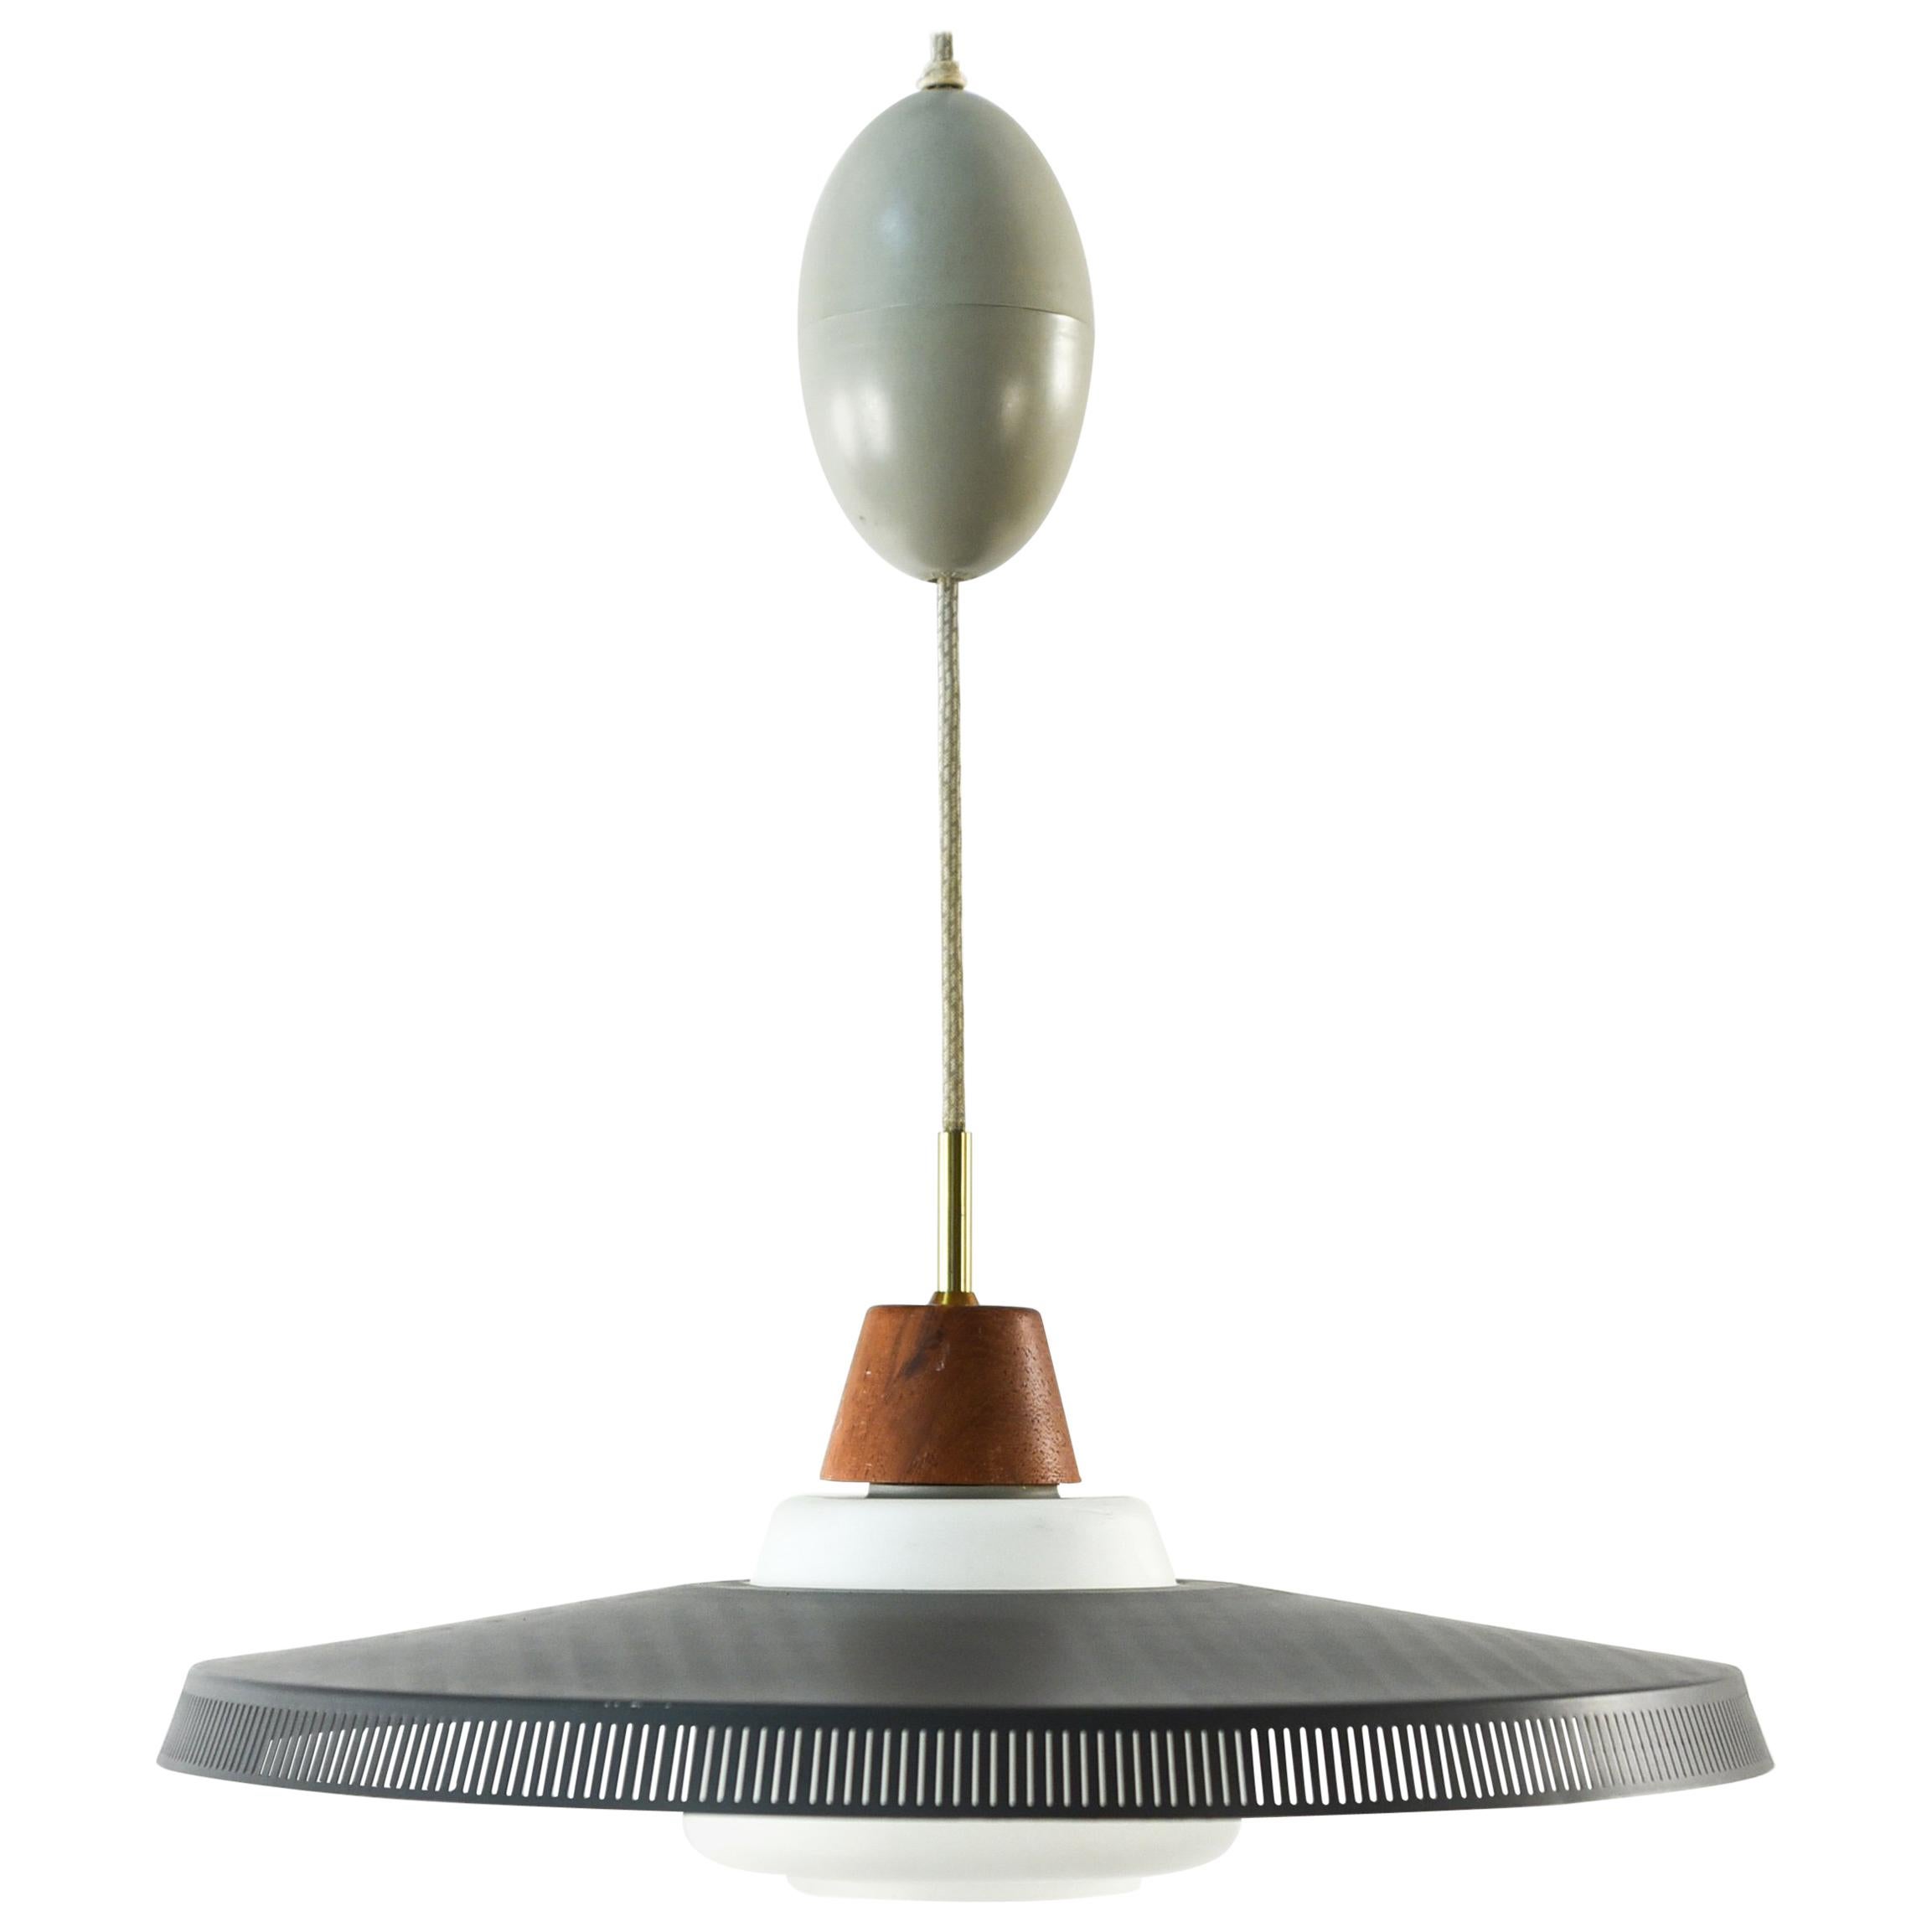 Danish Midcentury Teak Pendant Lamp by Bent Karlby for Lyfa, 1950s